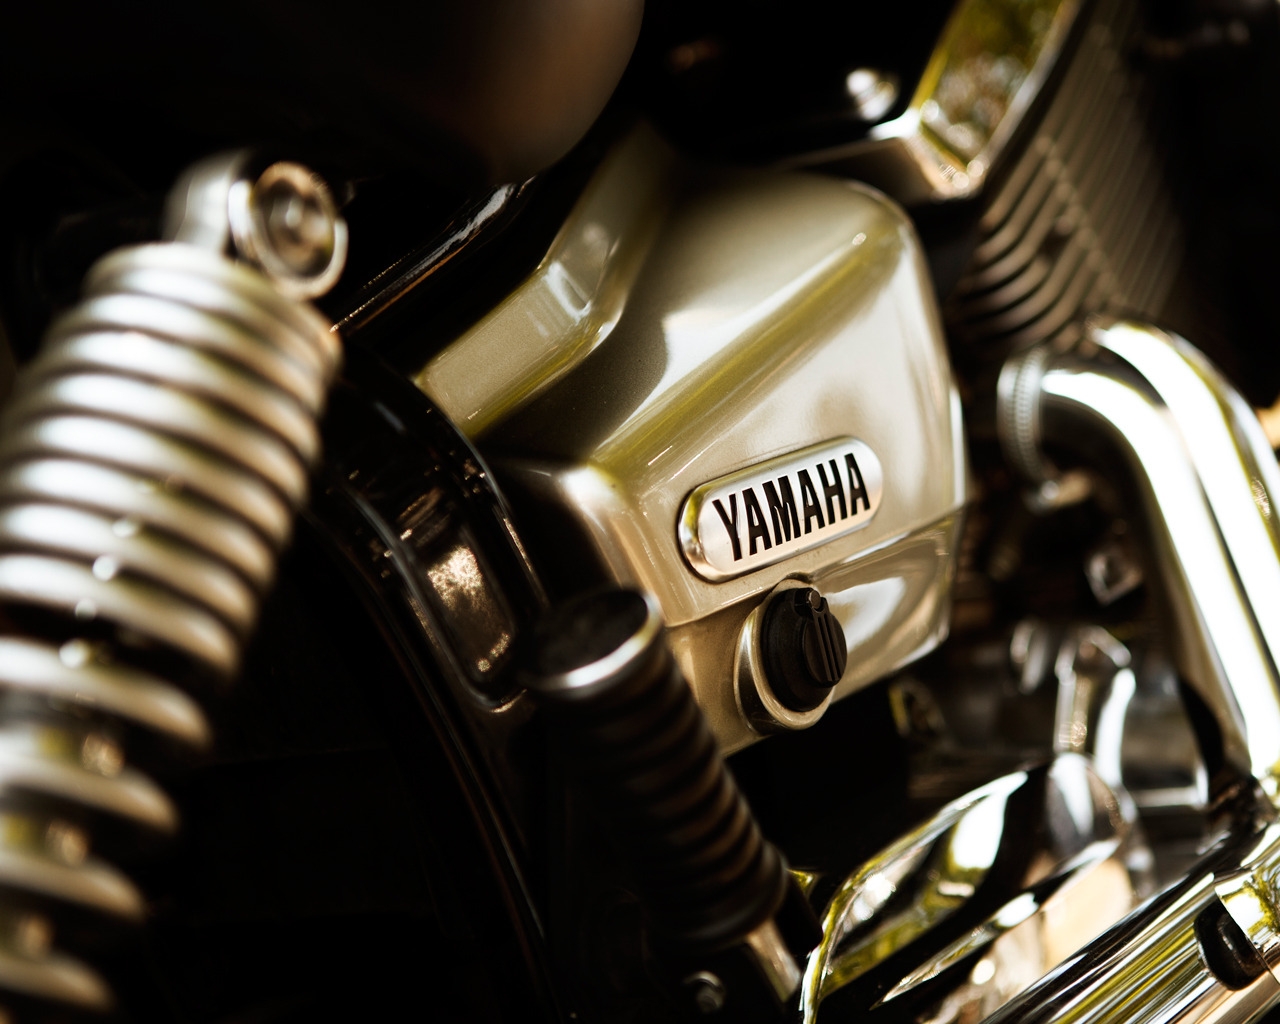 Yamaha bike Close-Up for 1280 x 1024 resolution